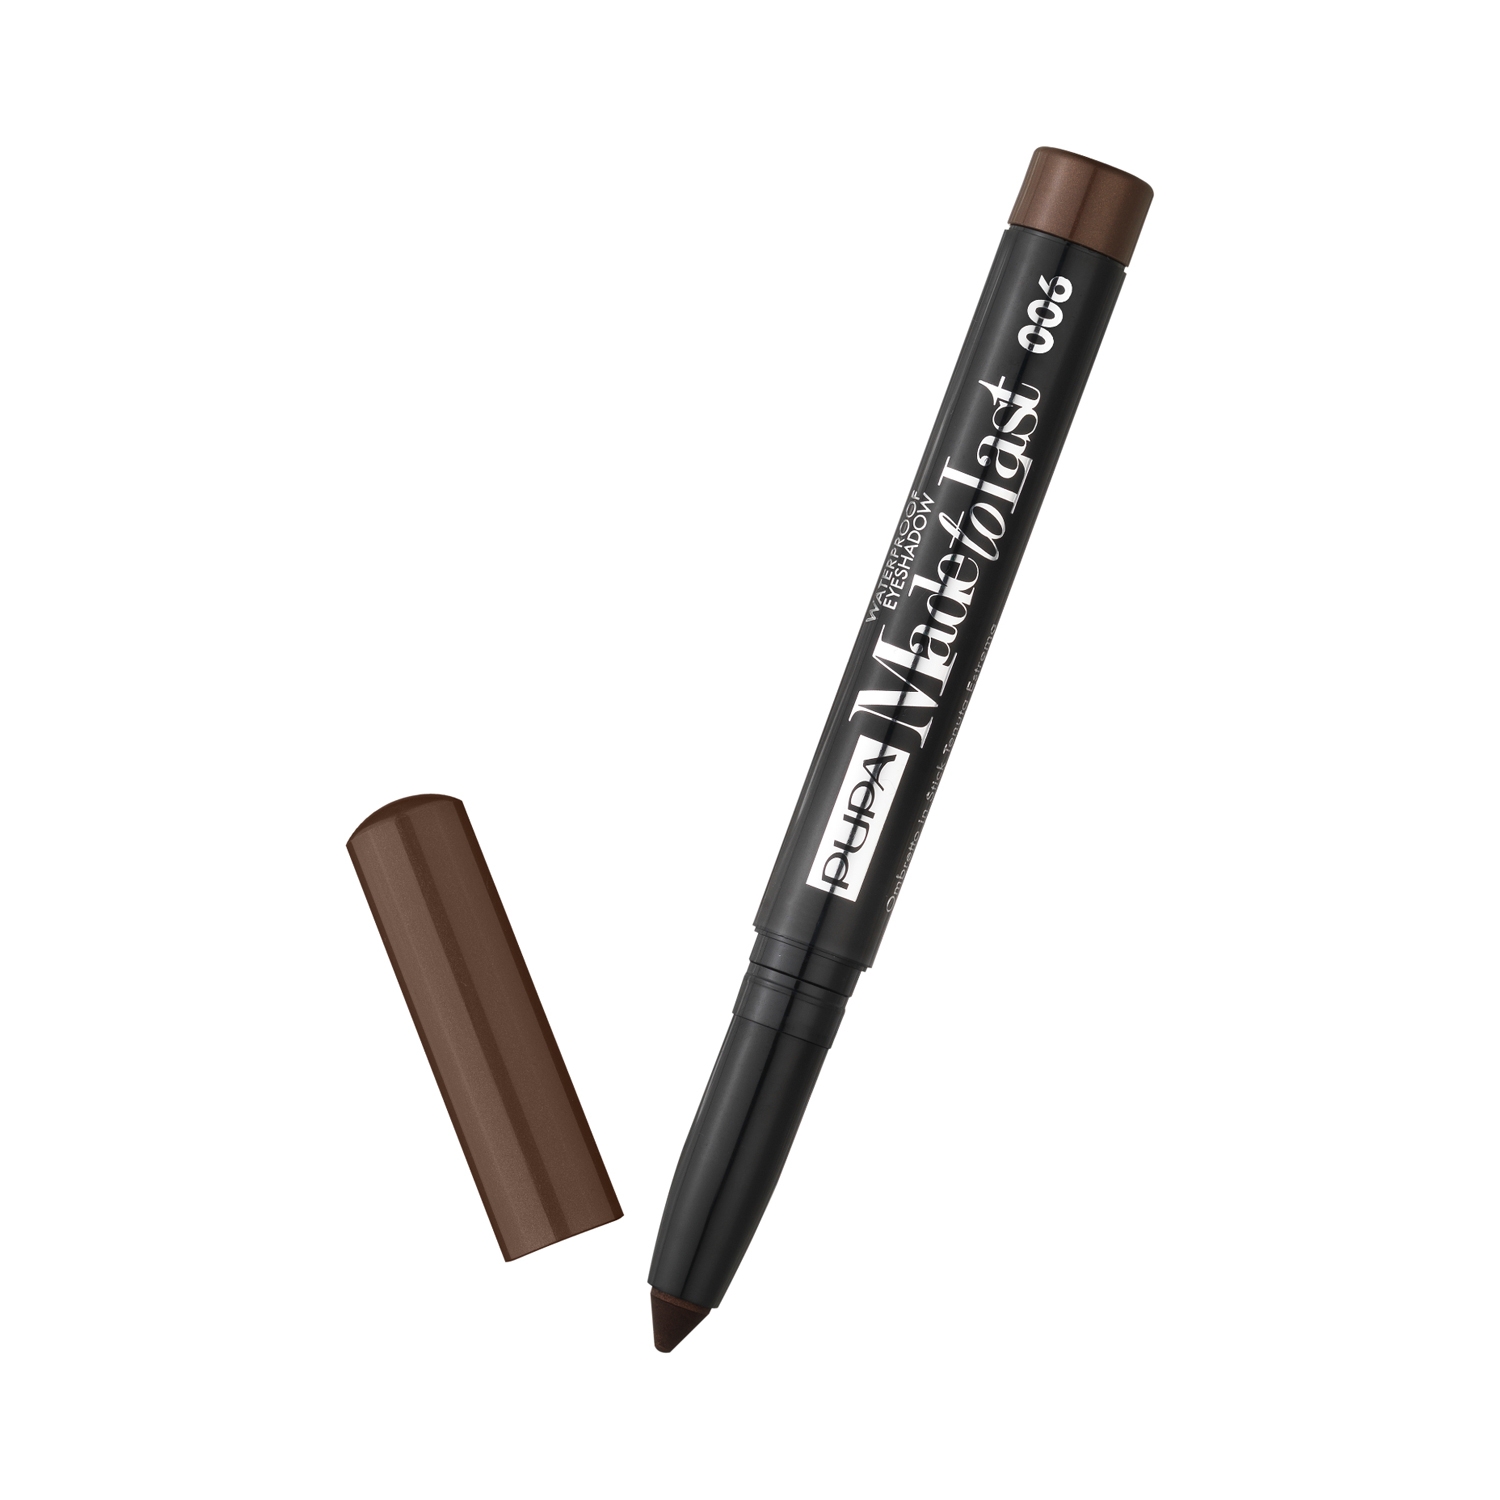 Pupa Milano | Pupa Milano Made To Last Waterproof Long Lasting Stick Eyeshadow - 006 Bronze Brown (1.4g)